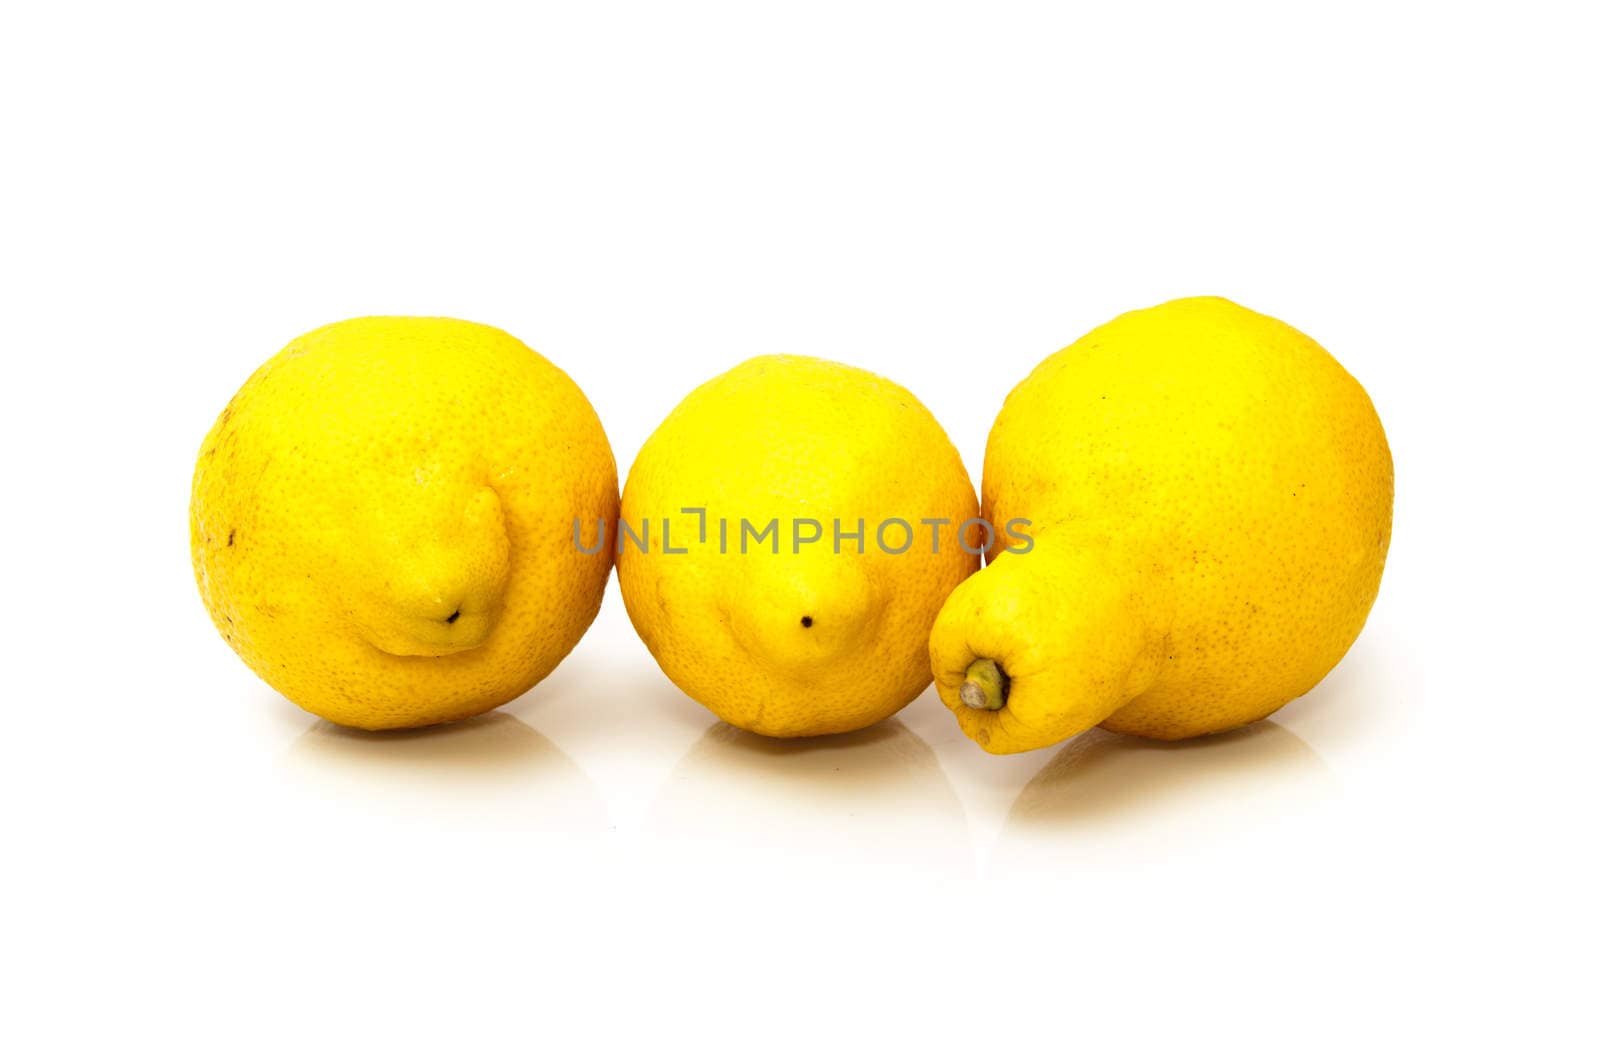 very acidic lemons by arnau2098